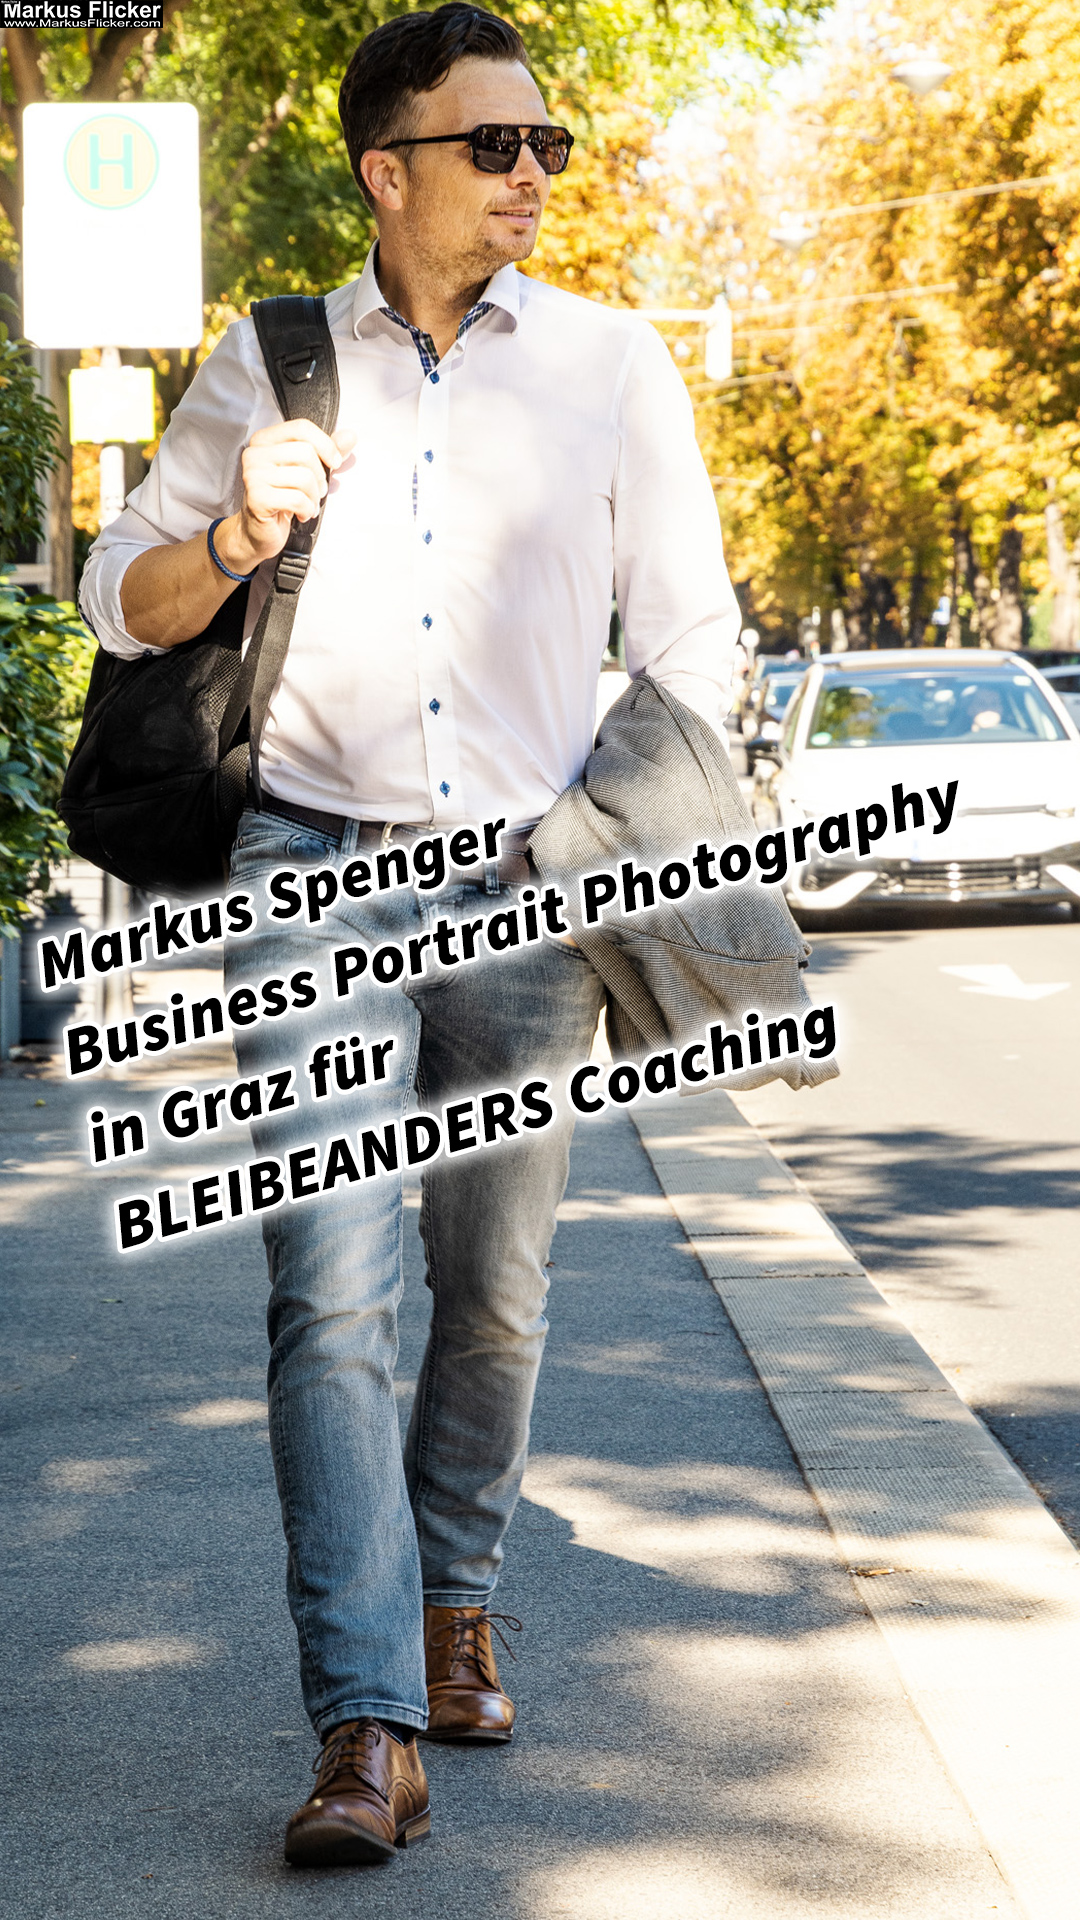 Markus Spenger Business Portrait Photography in Graz für BLEIBEANDERS Coaching